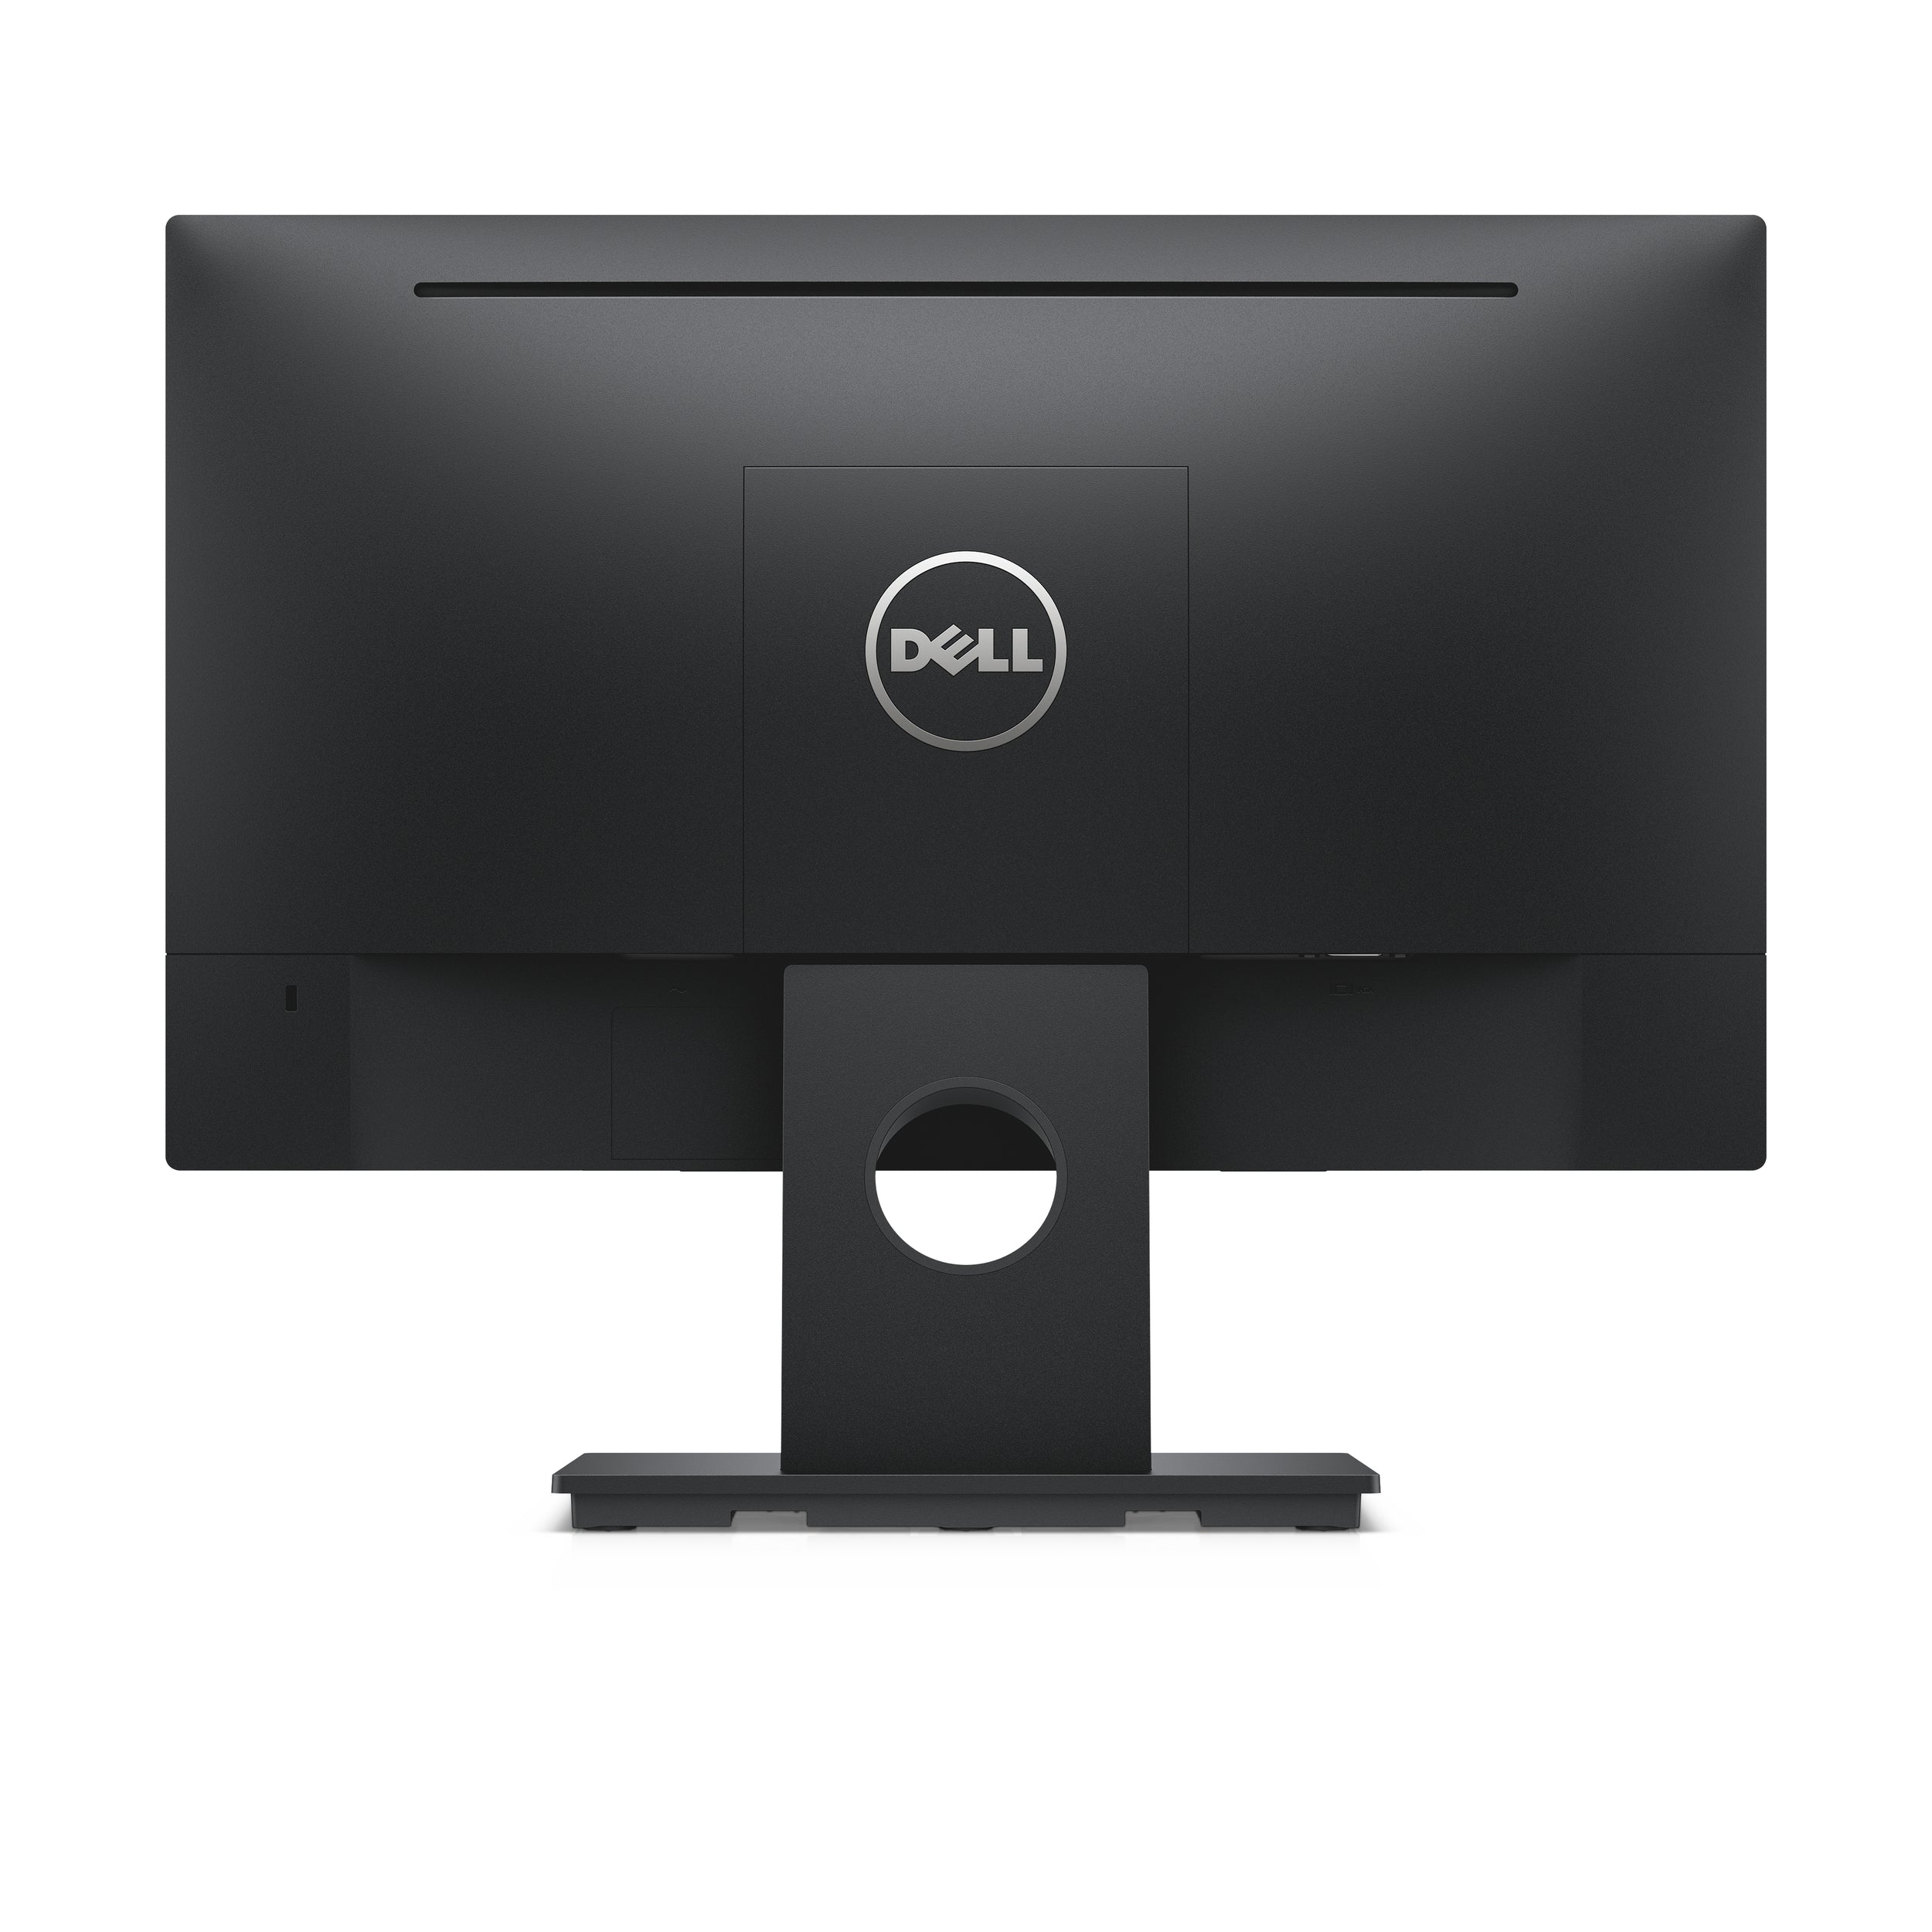 Monitor Dell E1916Hv 18.5 Pulgadas 250 Cd / M² 1366 X 768 Pixeles Ms Negro